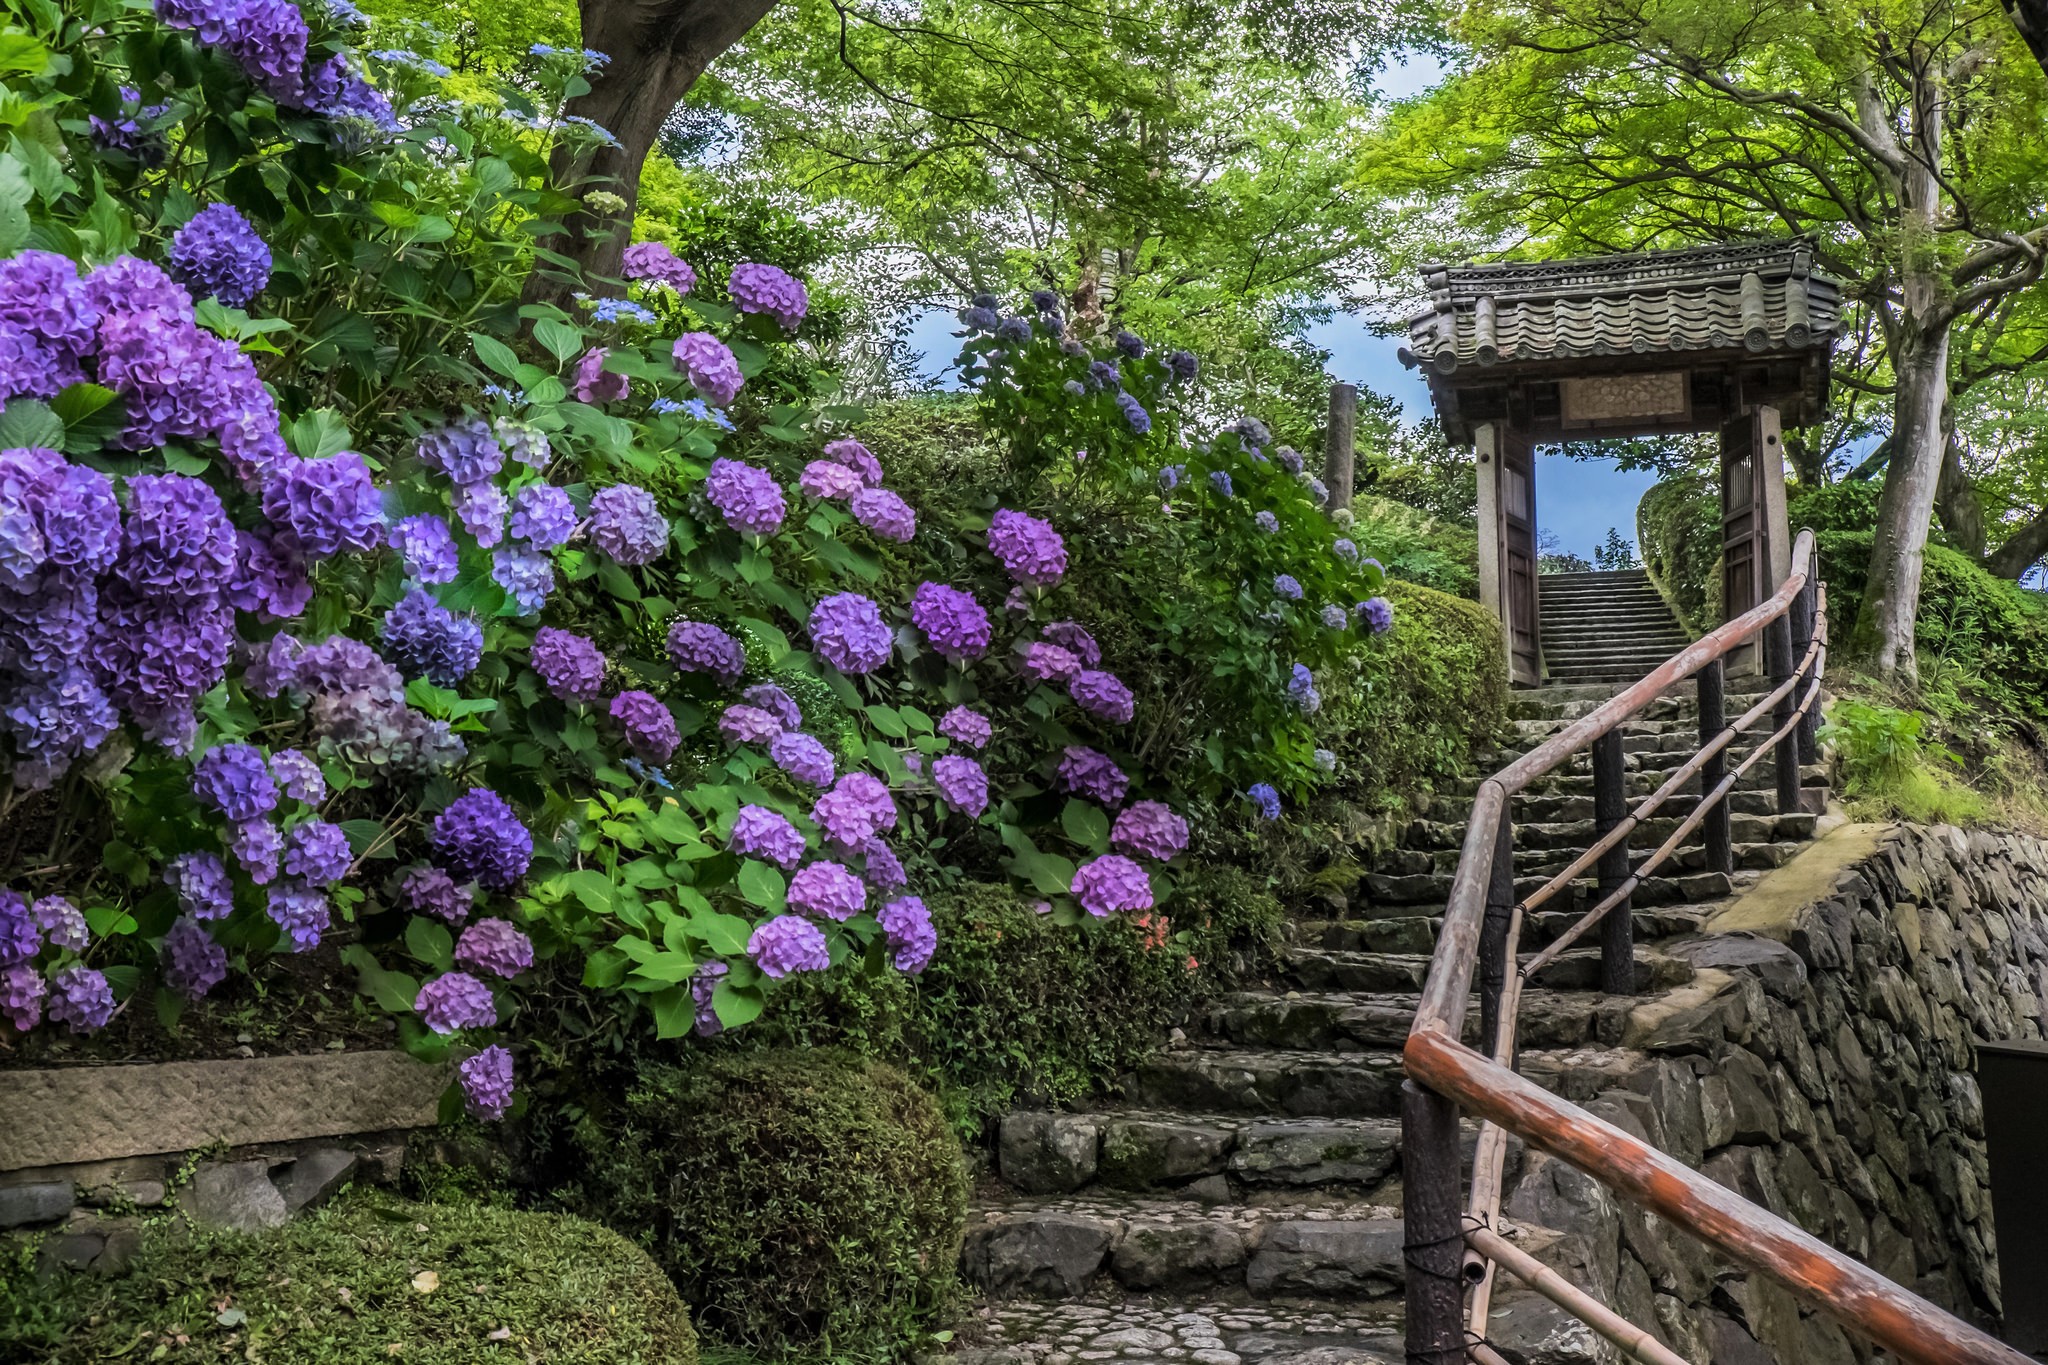 man made, stairs, flower, hydrangea, park, purple flower, spring, steps